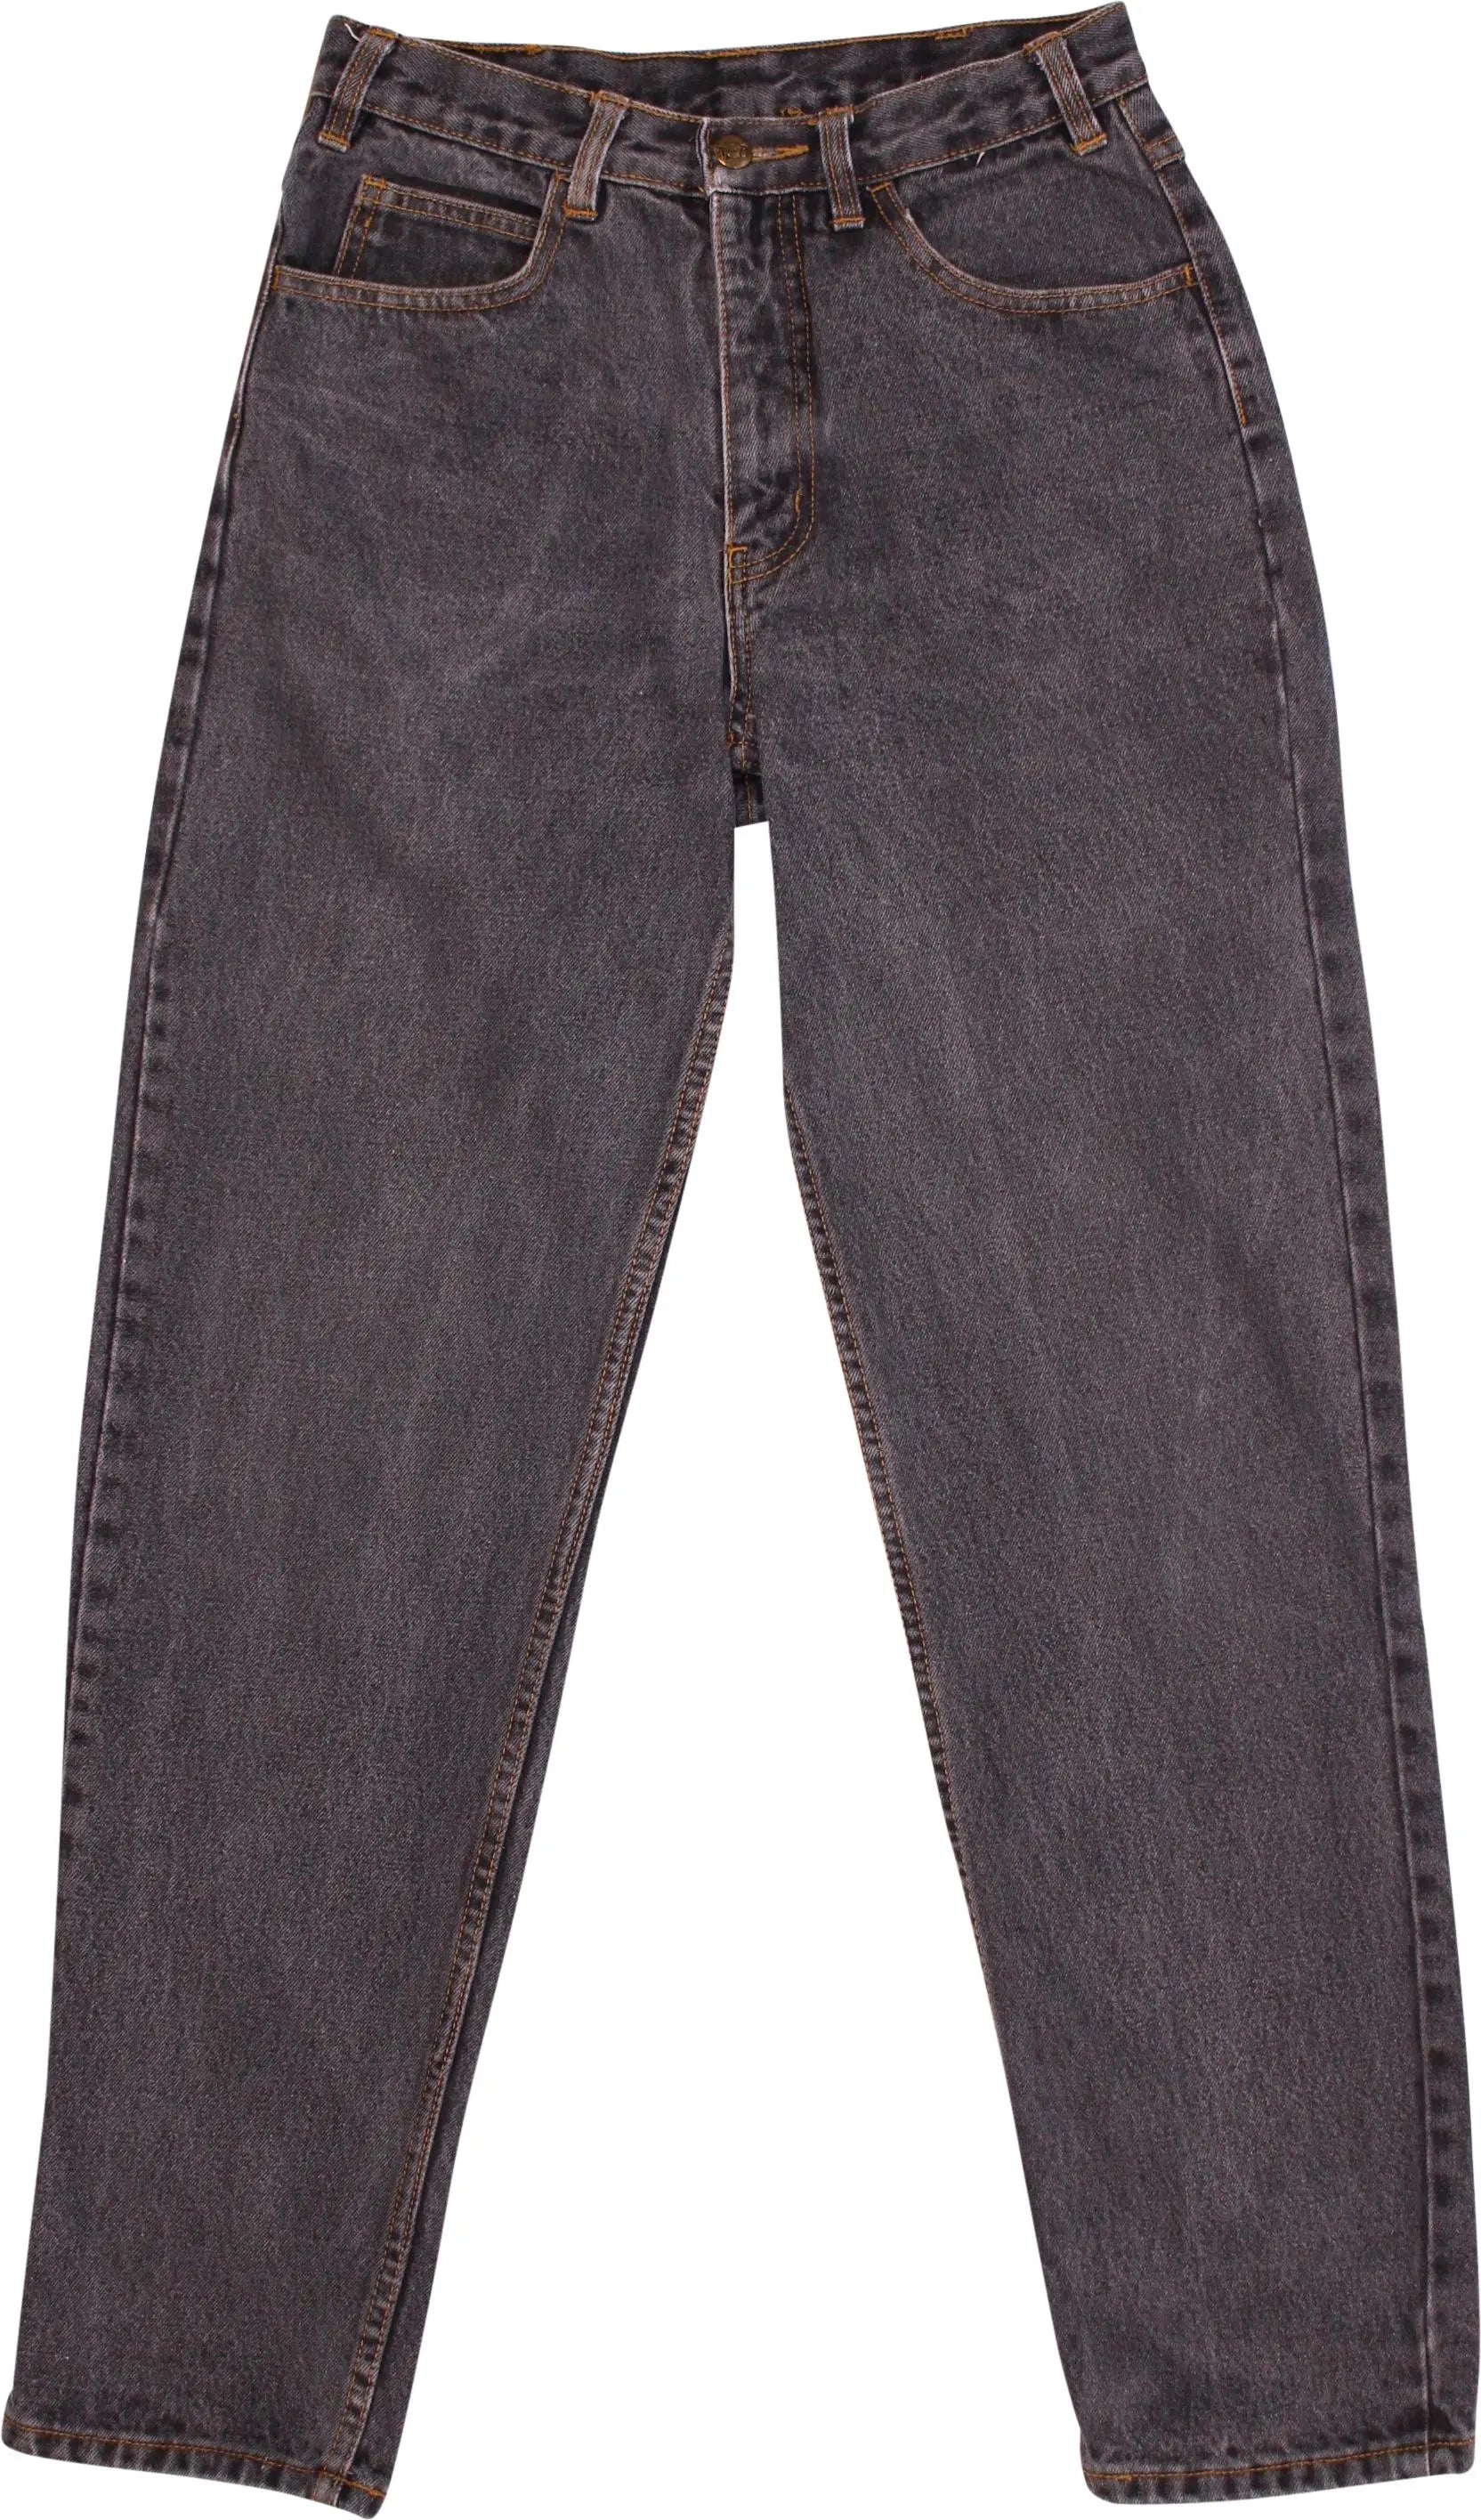 Top Jeans - Denim Jeans Regular Fit- ThriftTale.com - Vintage and second handclothing